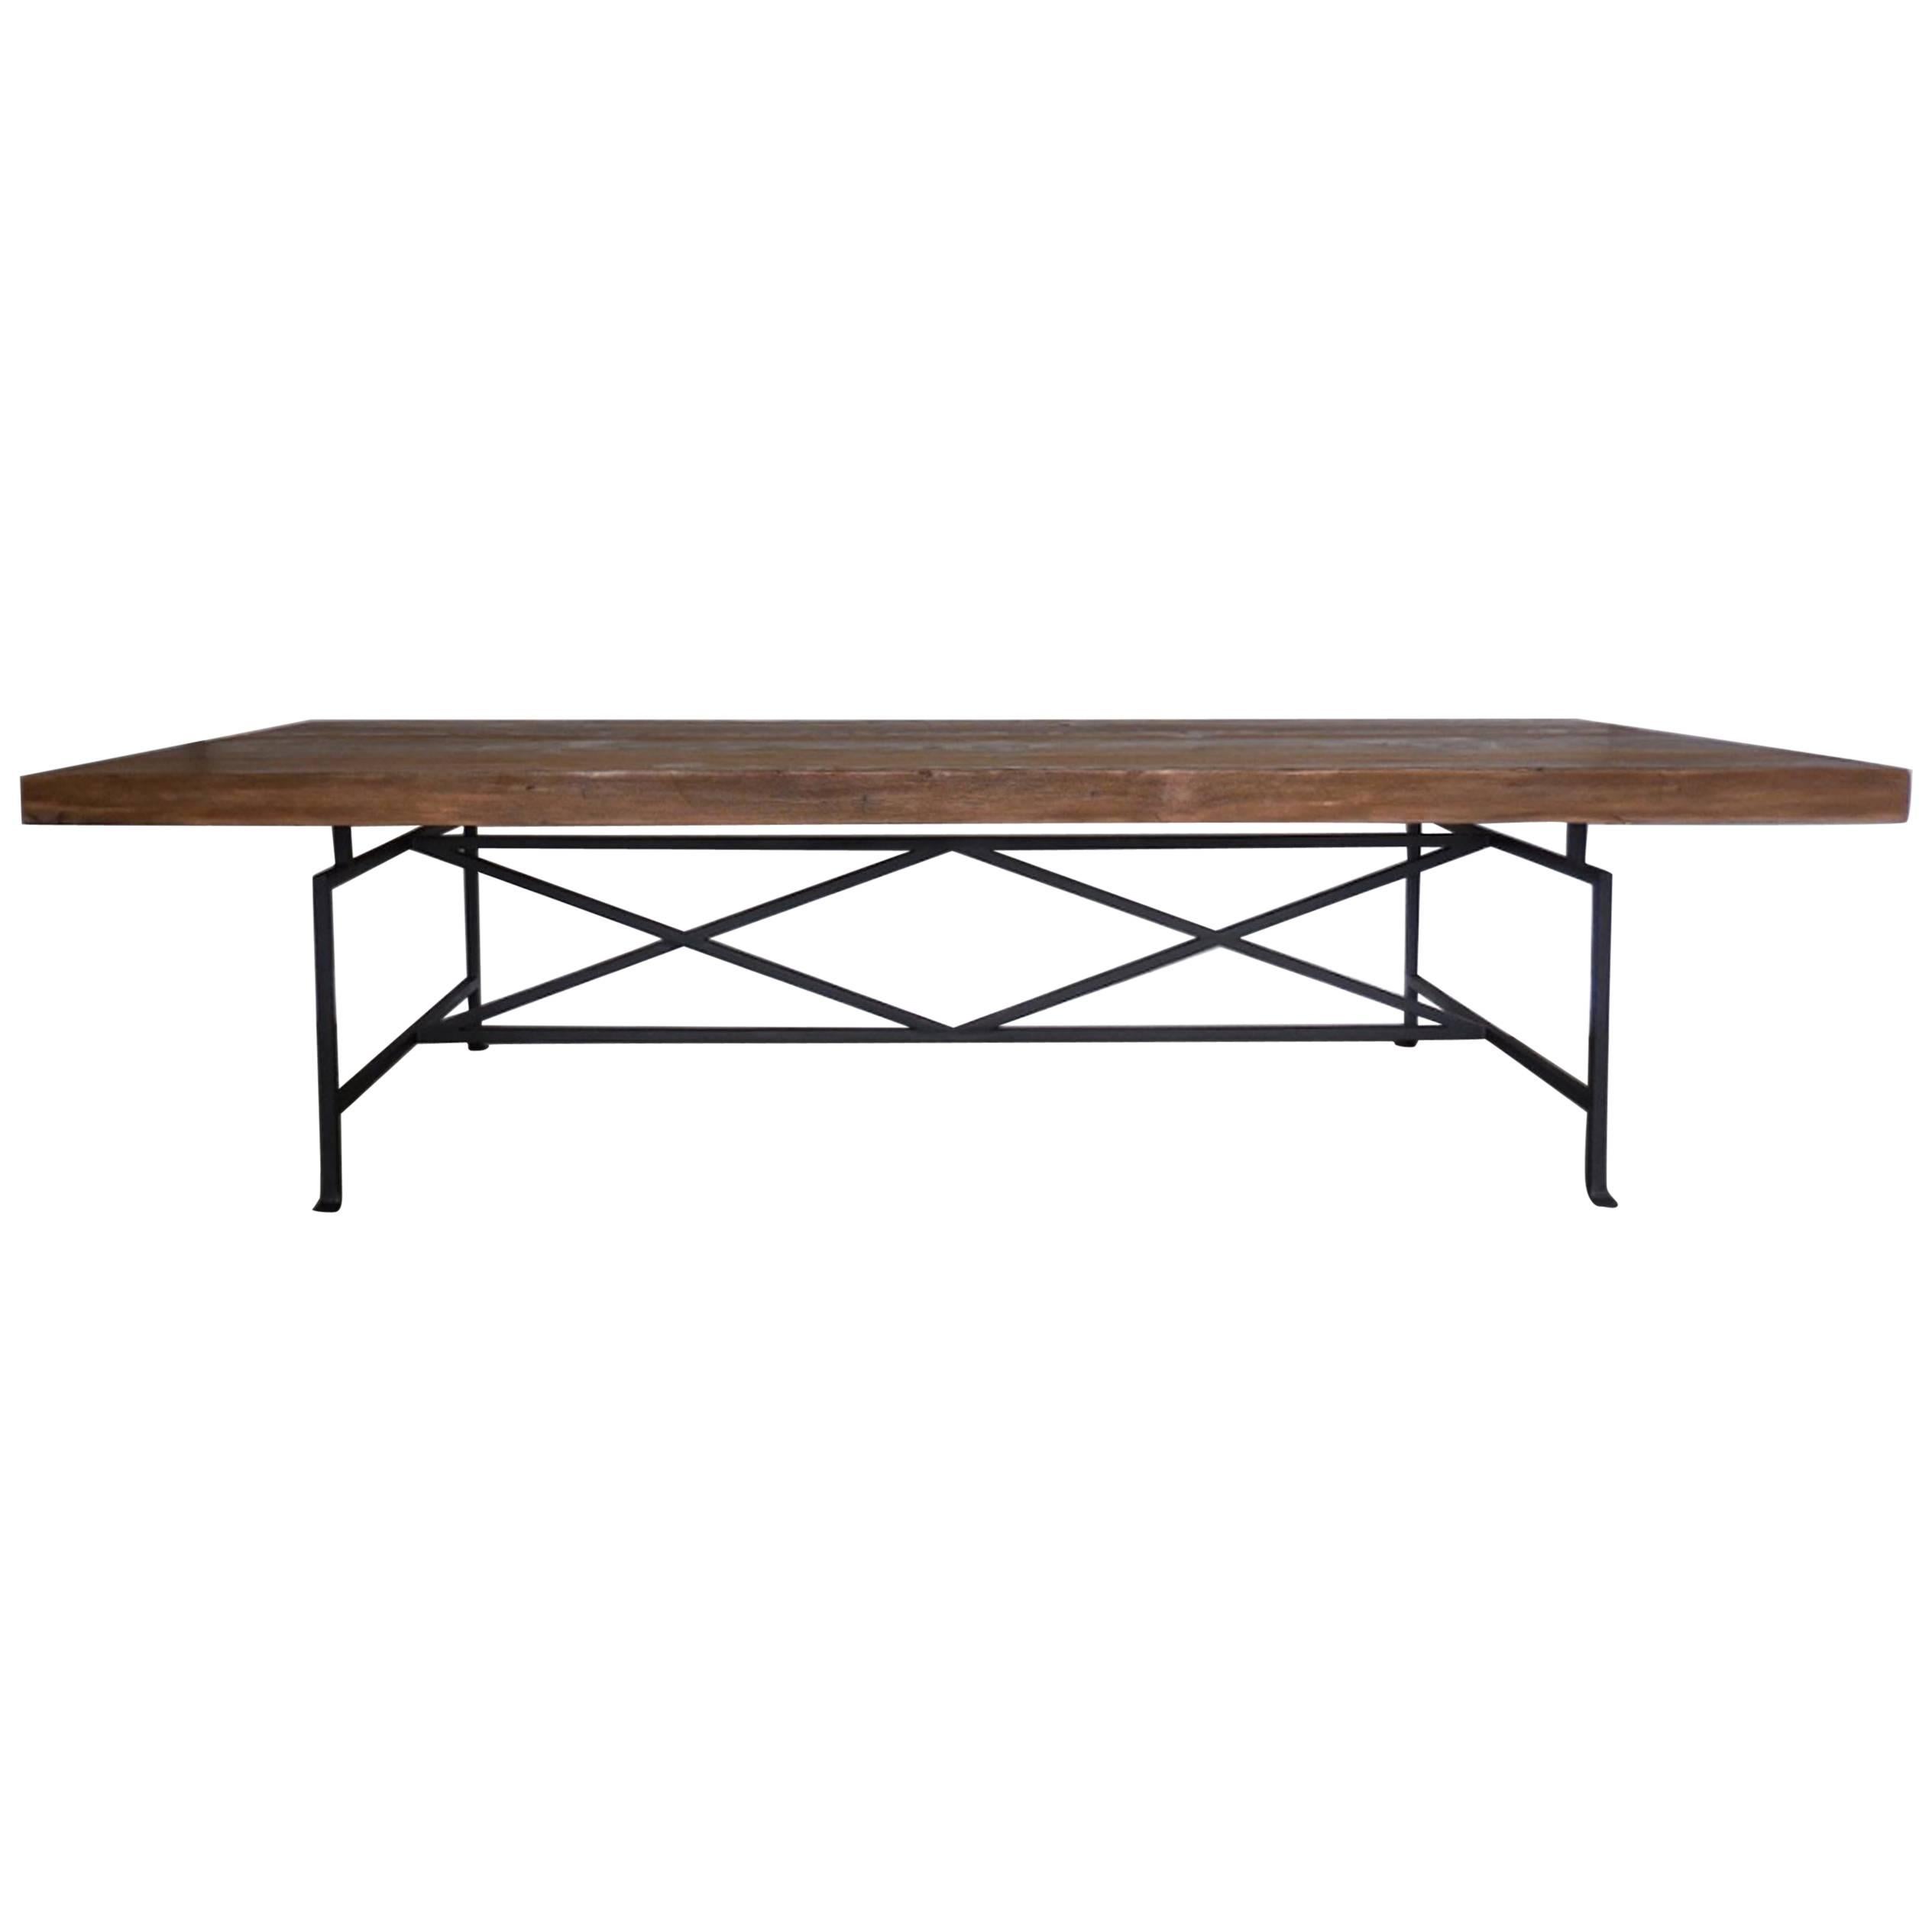 Custom Reclaimed Wood Table with Iron Base